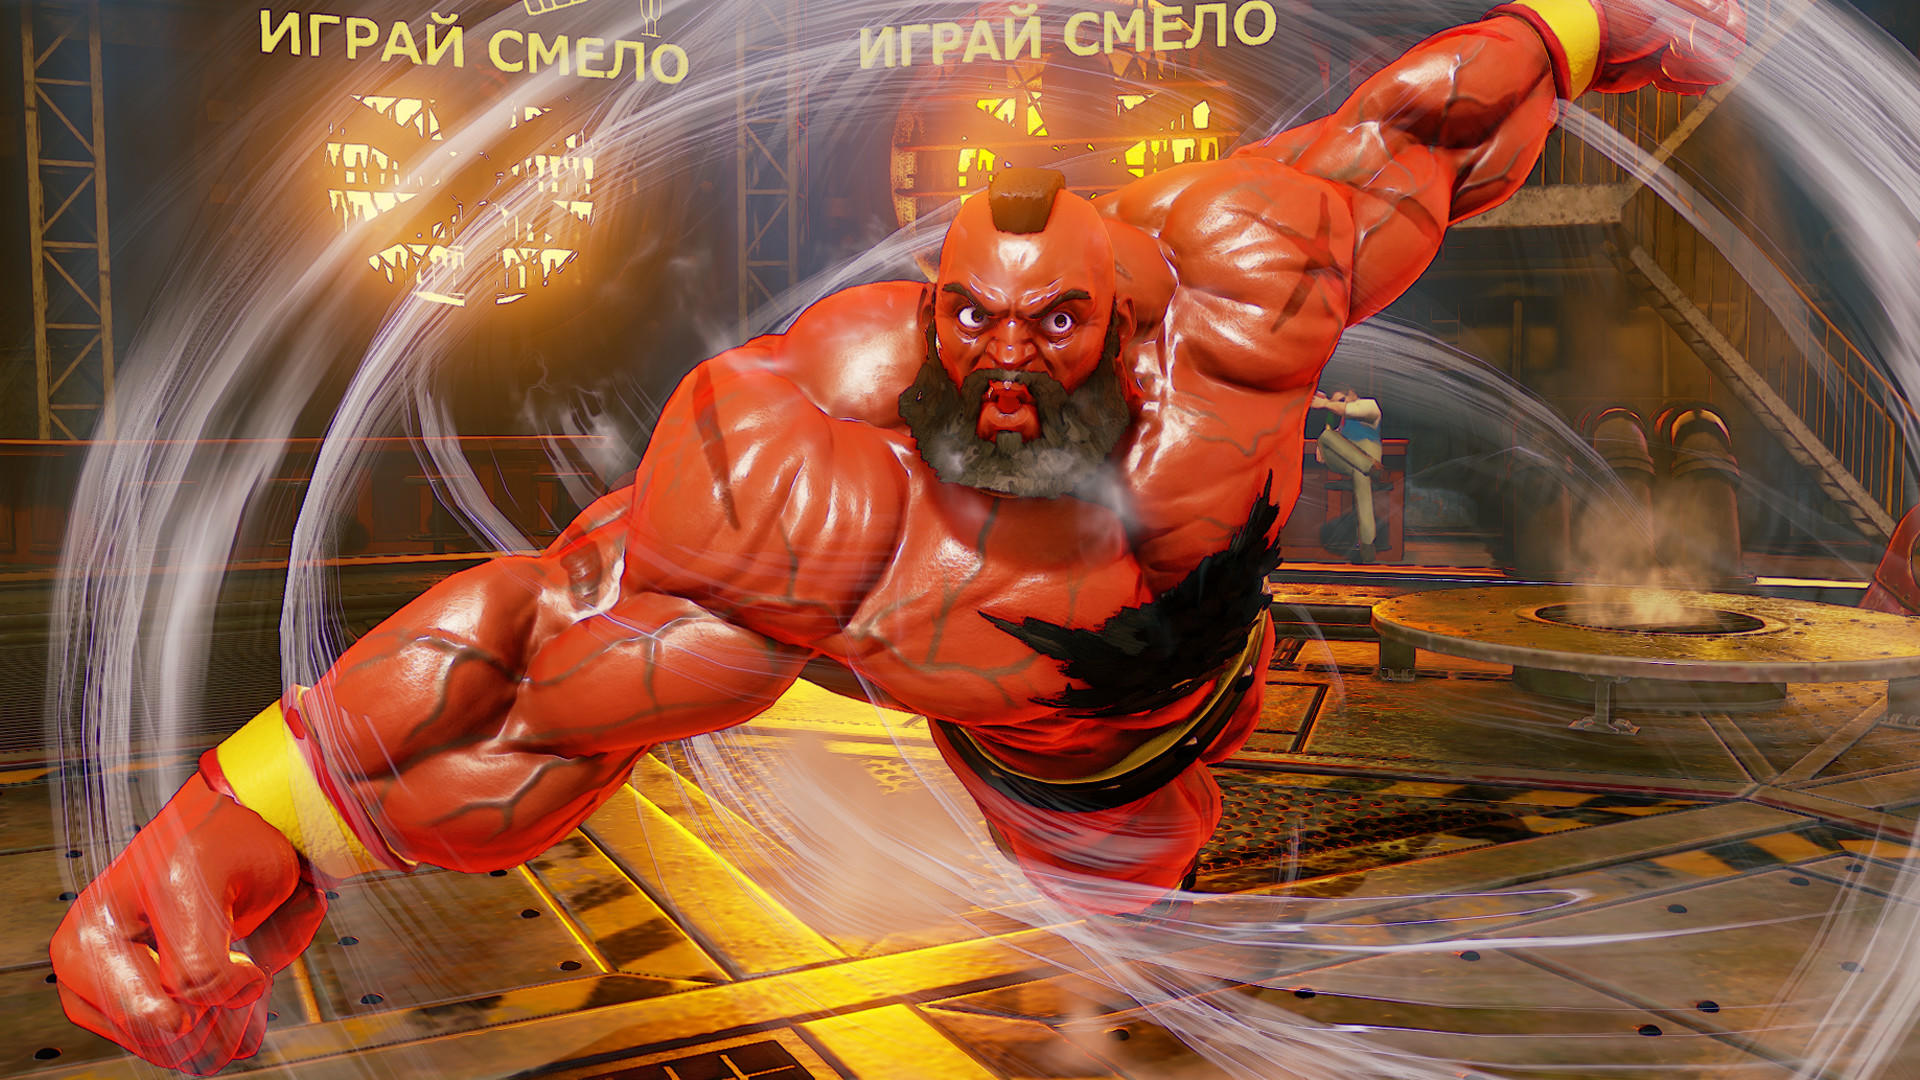 Screenshot of Street Fighter V